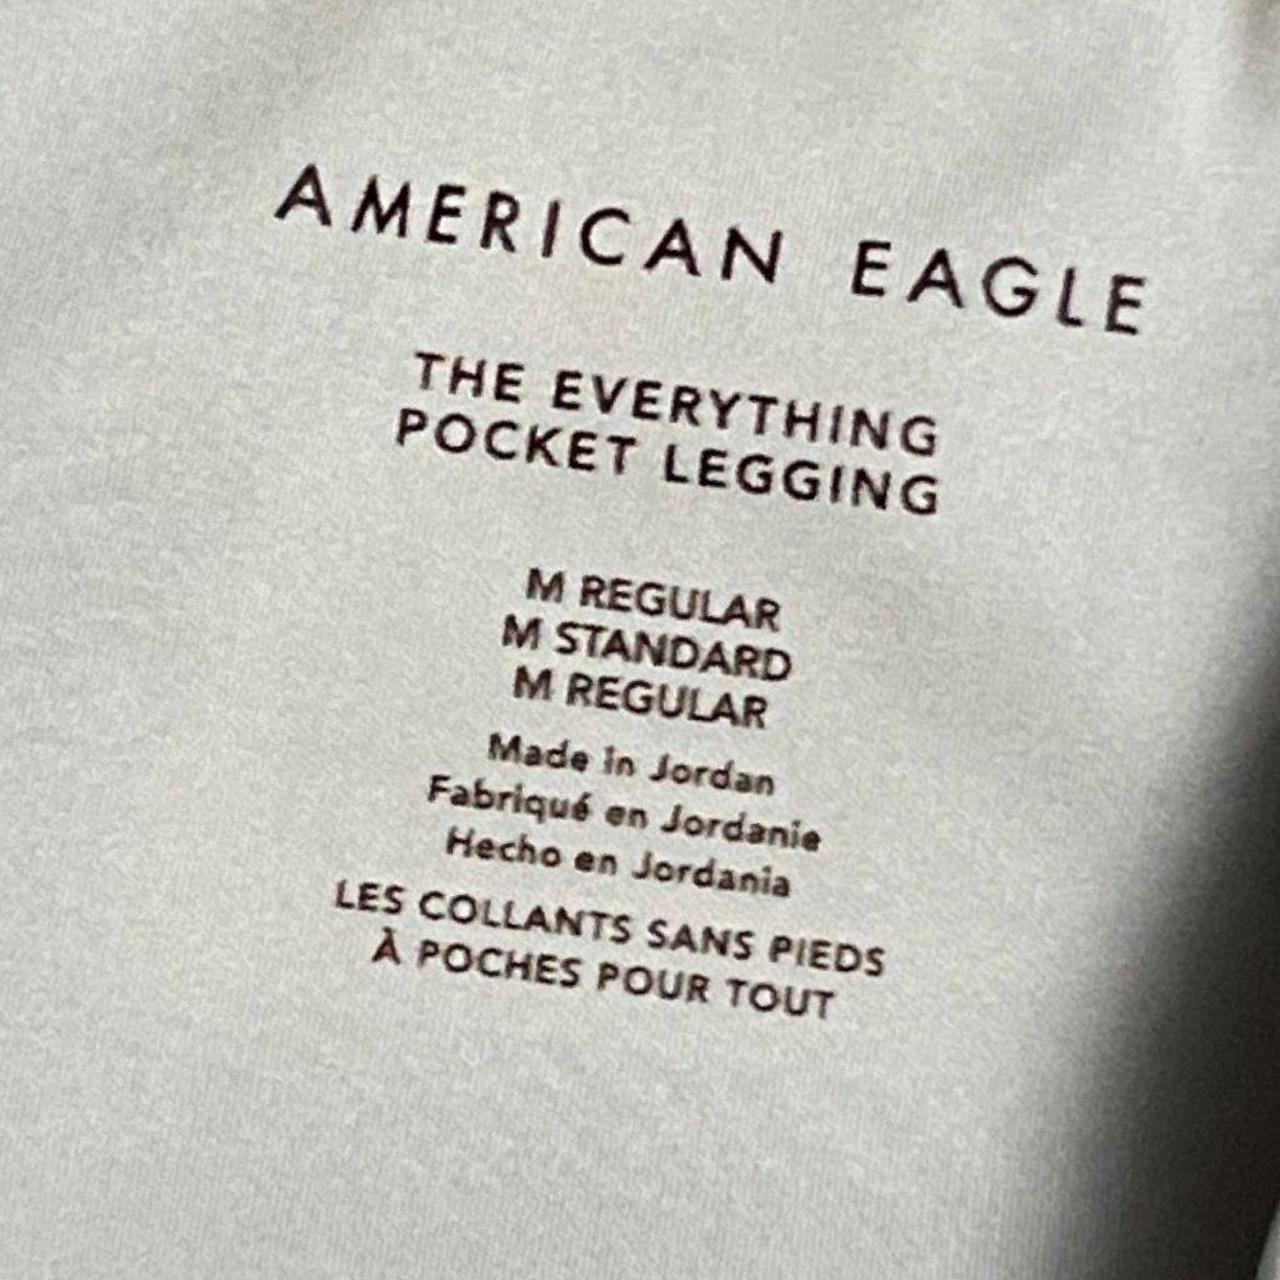 American Eagle black leggings That everything pocket - Depop